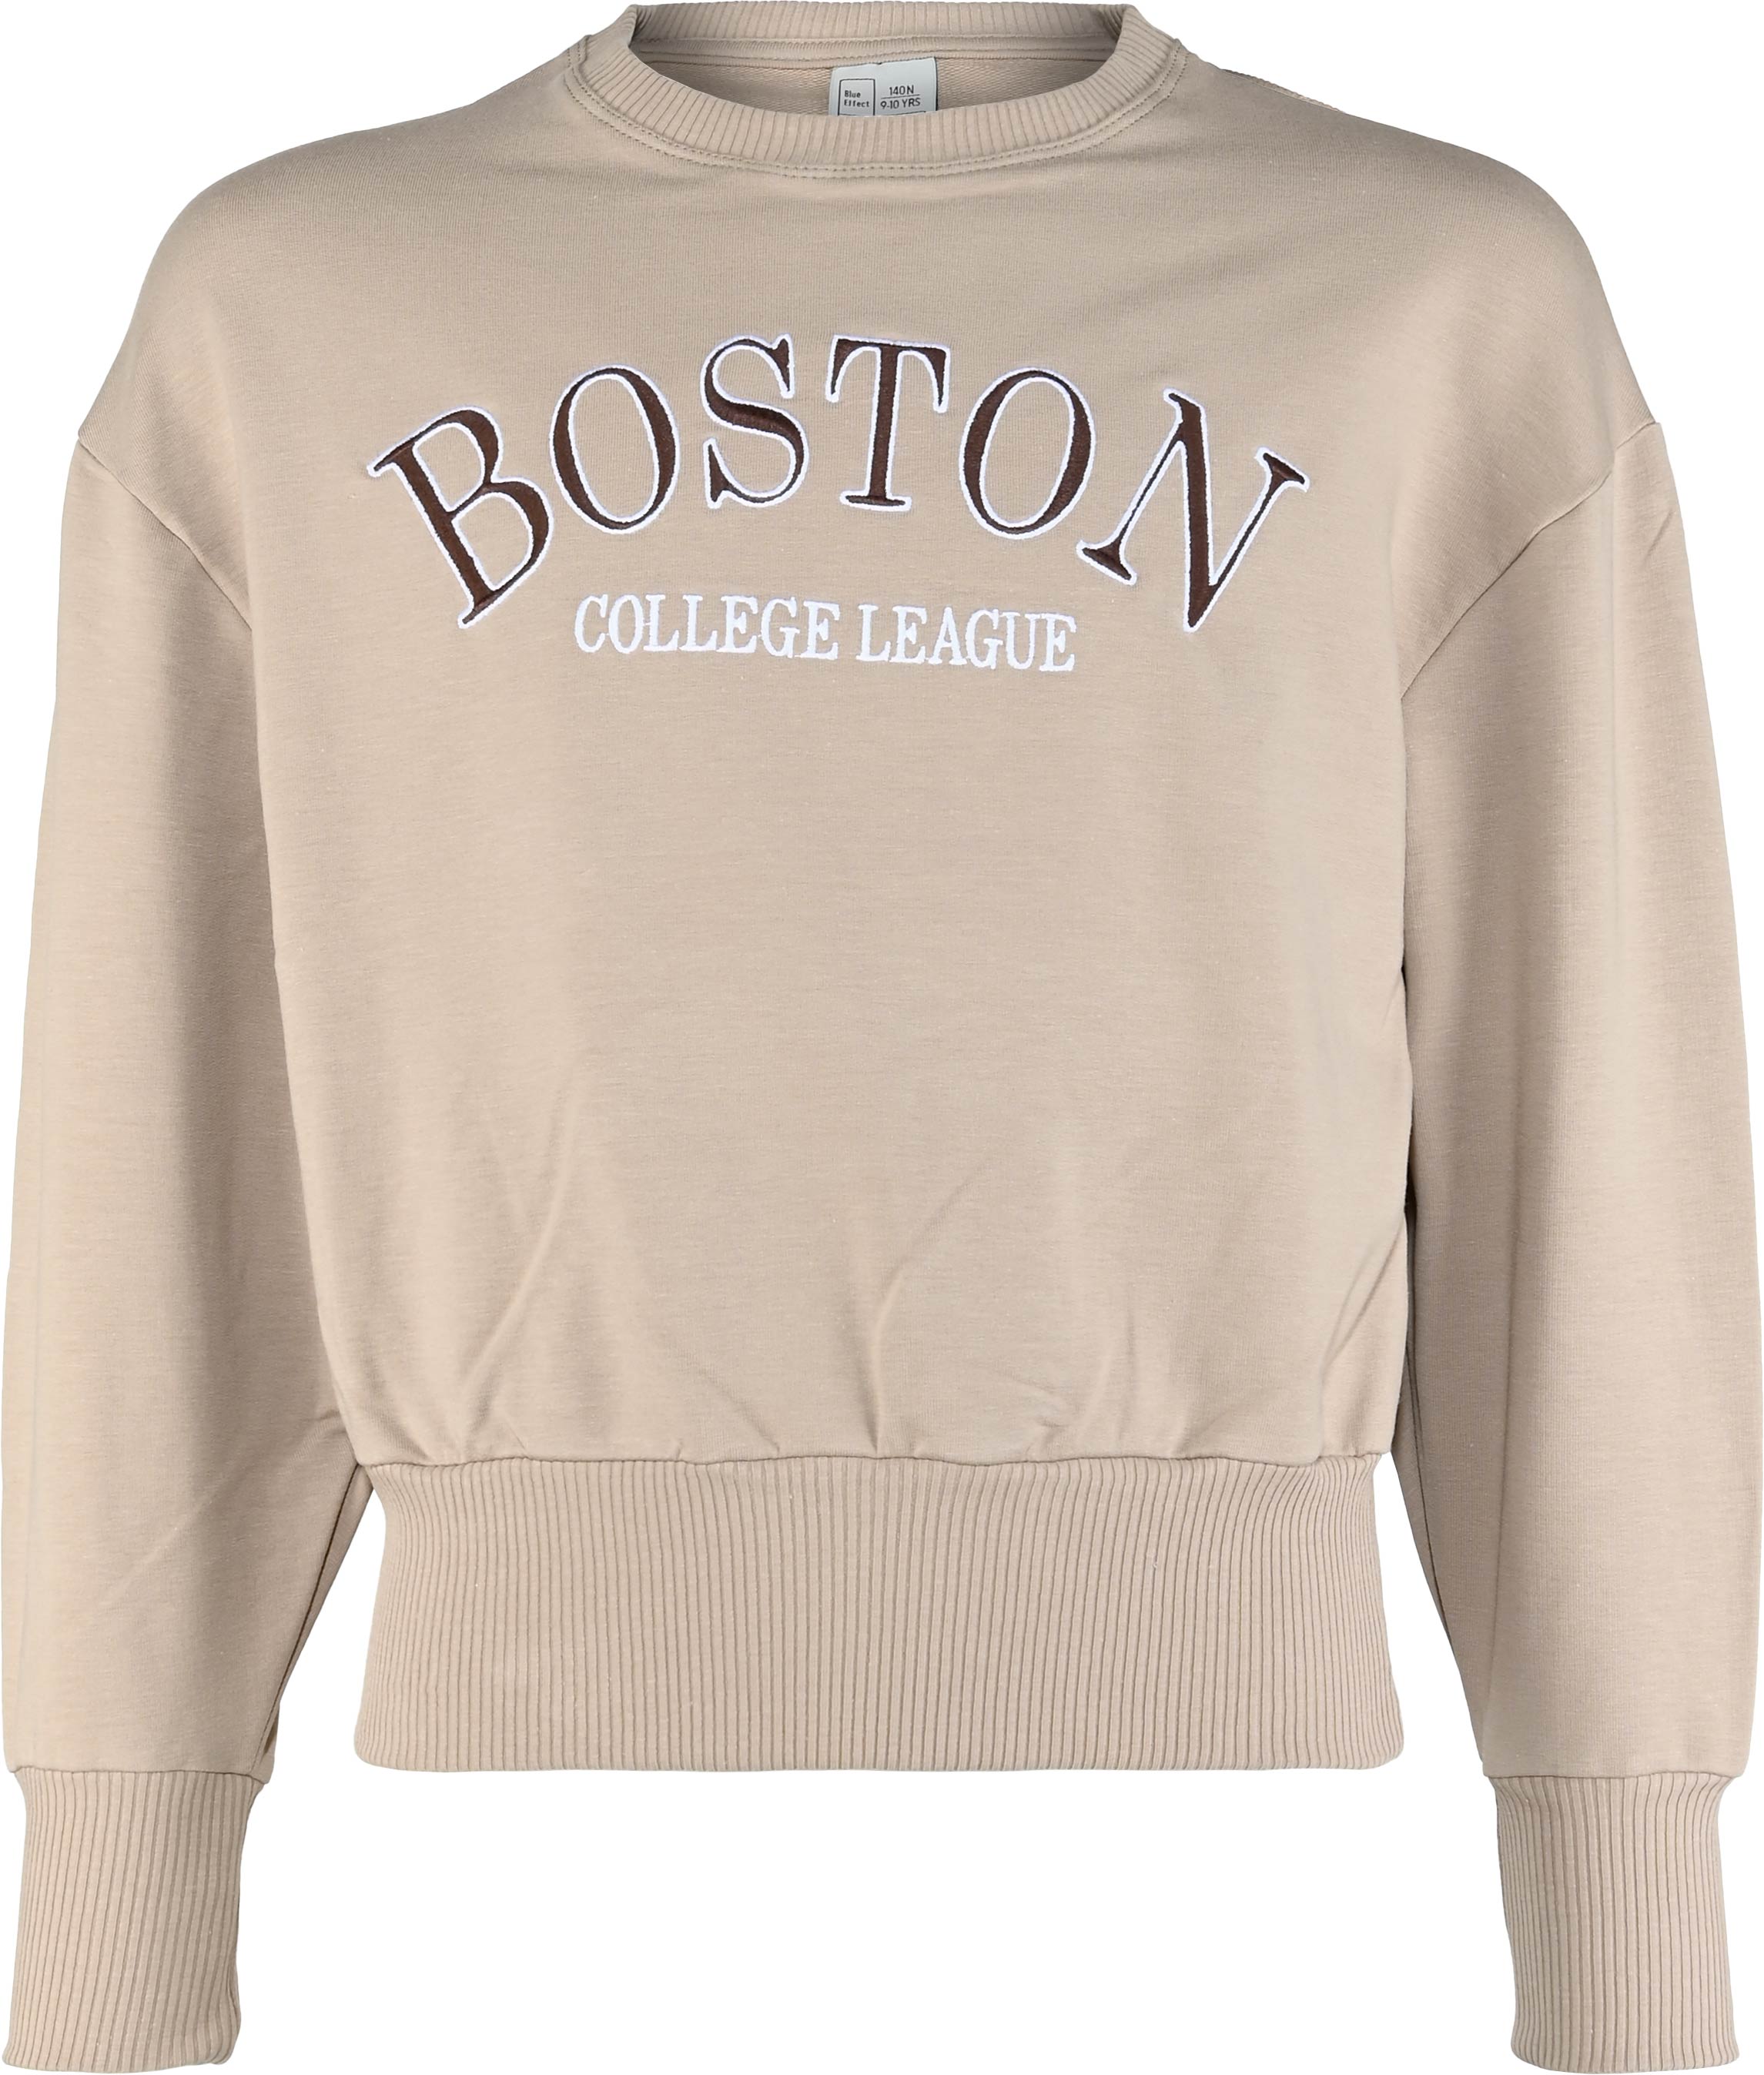 5782-JRNY Girls Sweatshirt -Boston